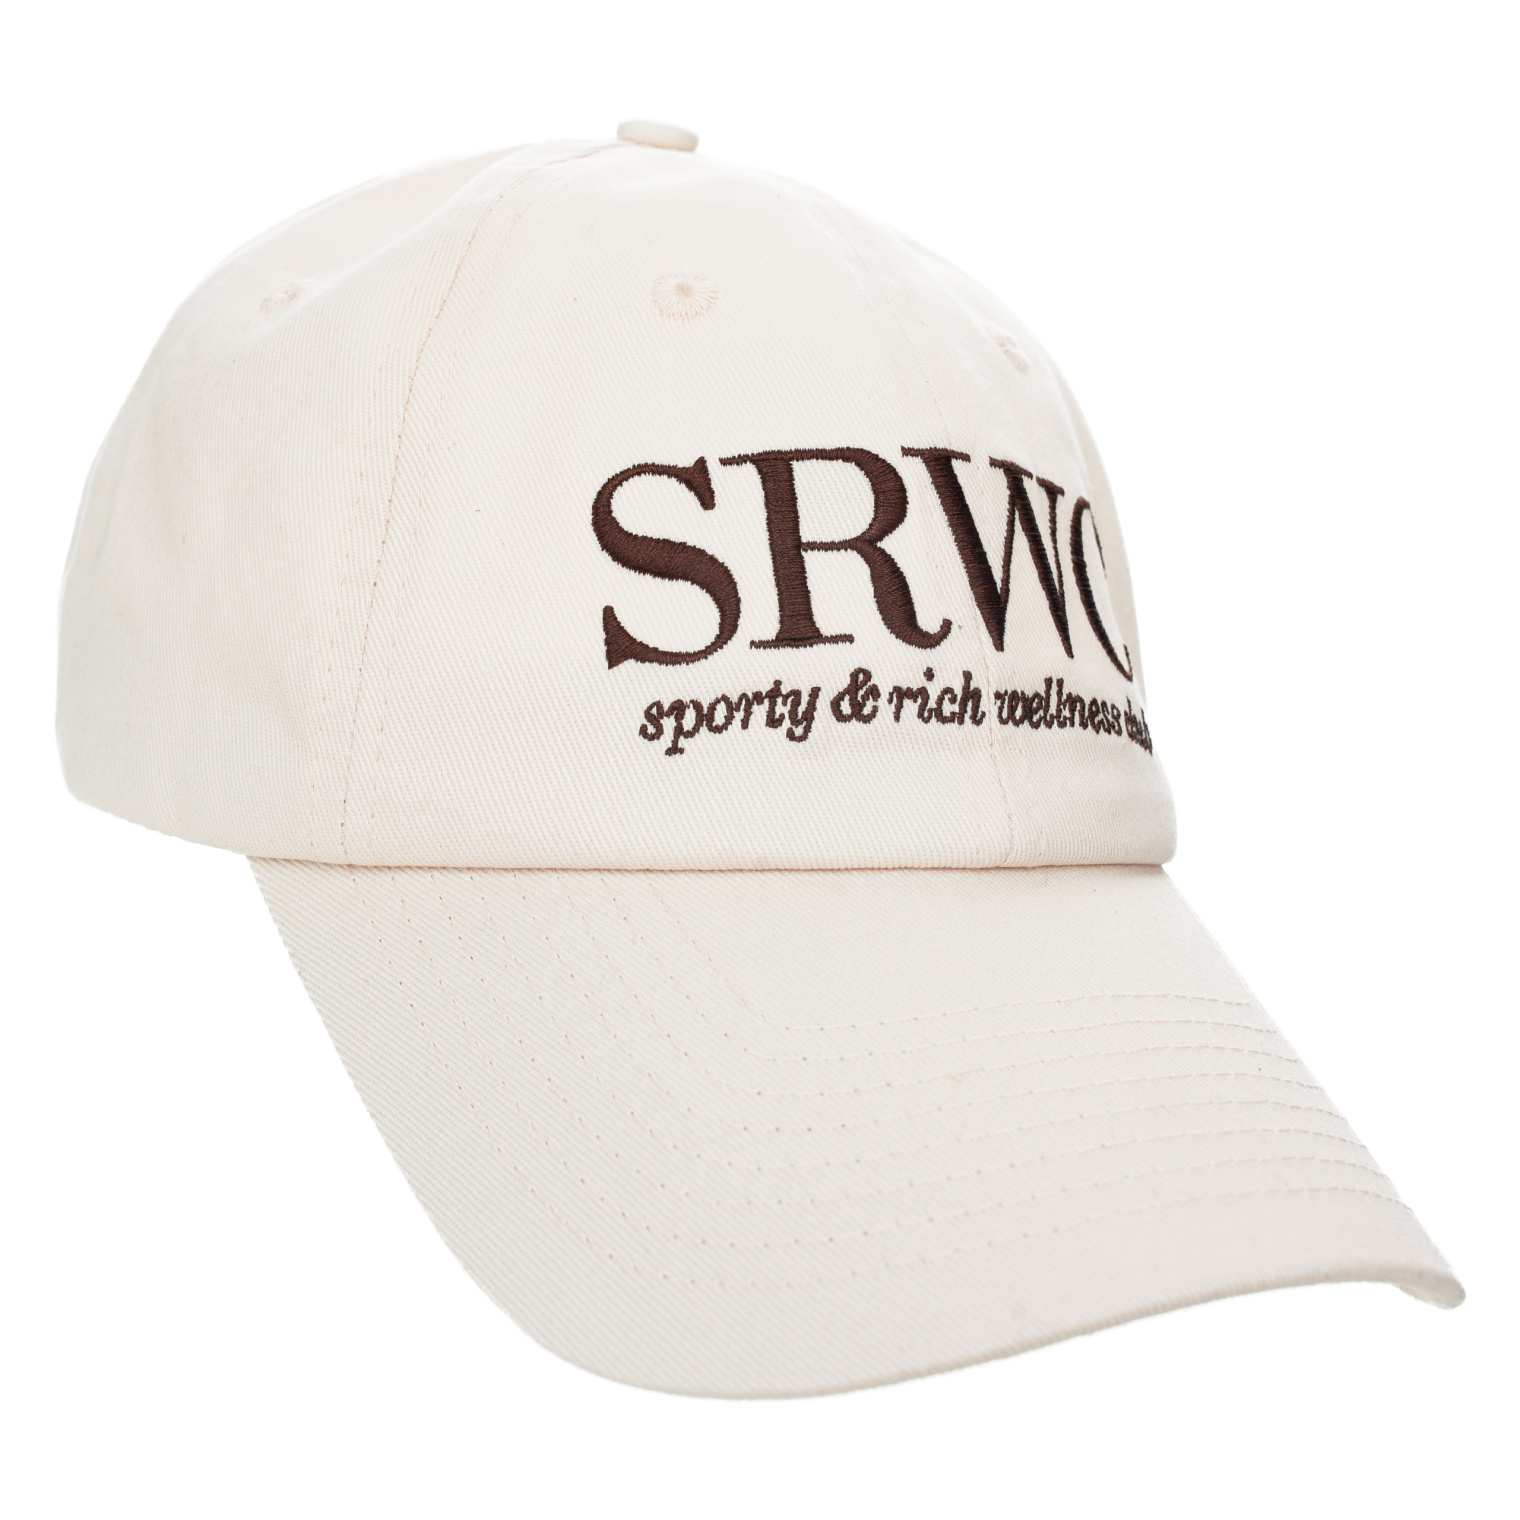 SPORTY & RICH SRWC embroidered cap